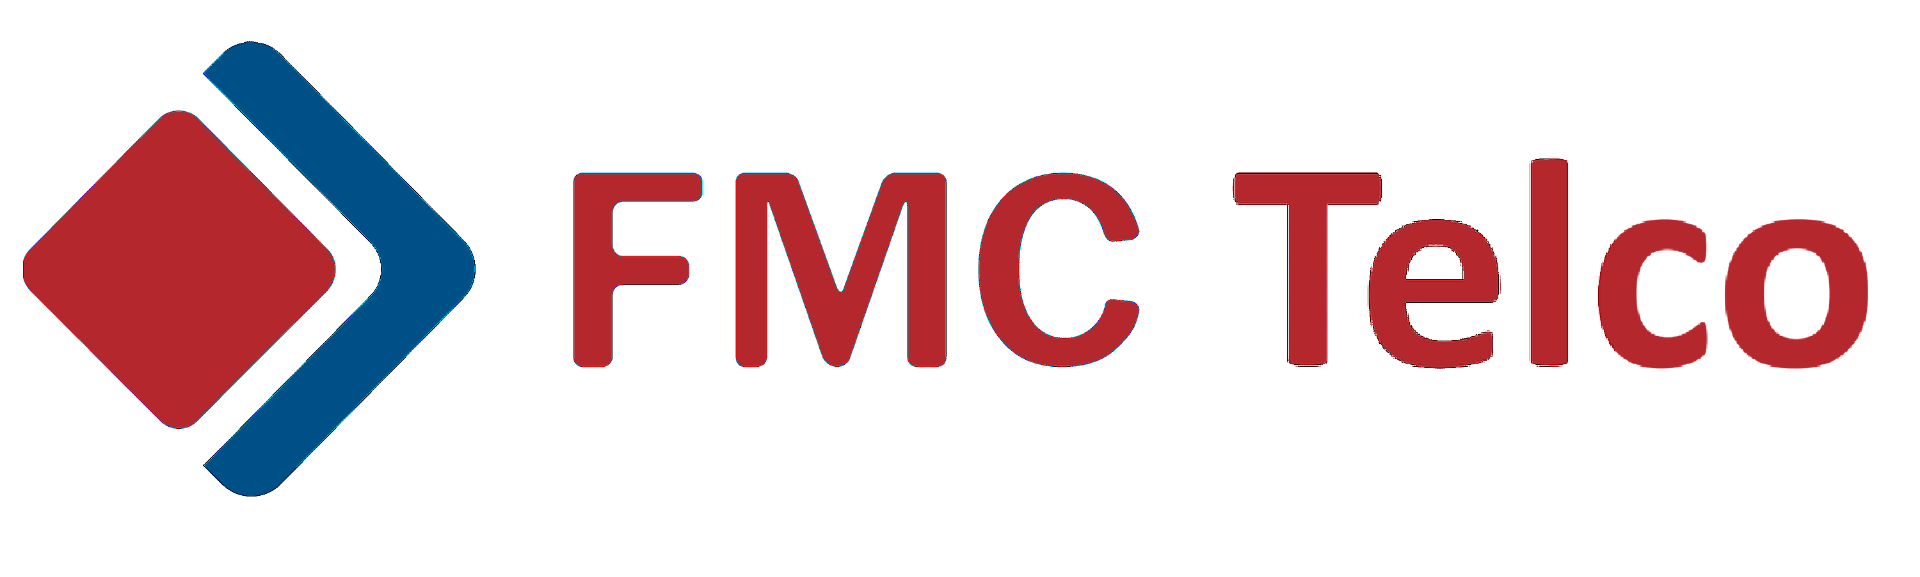 fmc logo footer